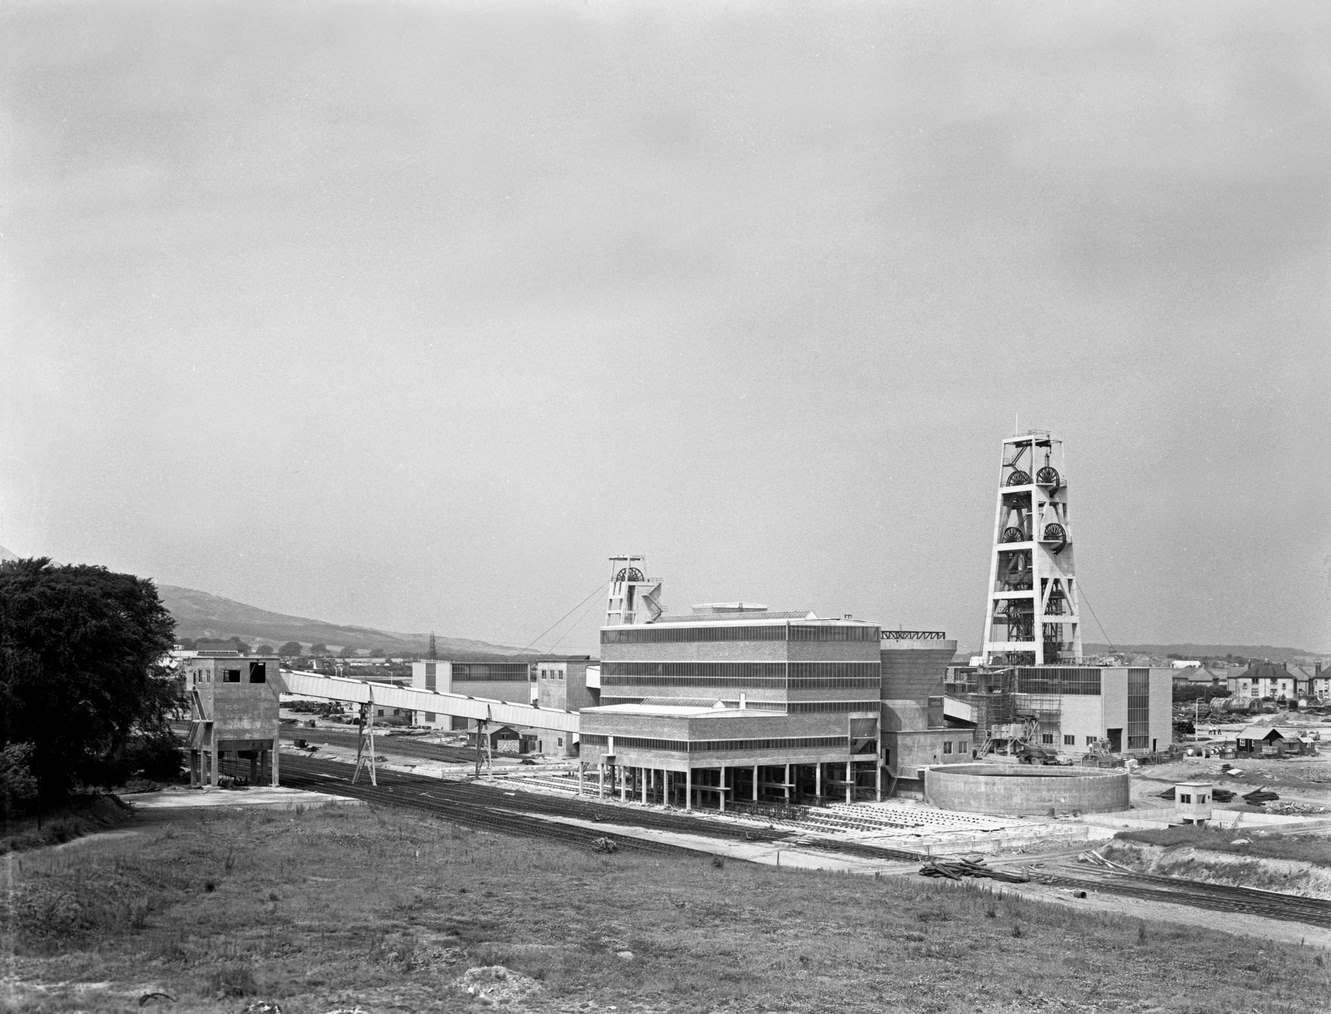 Bilston Glen Colliery, Midlothian, Scotland, 1960.